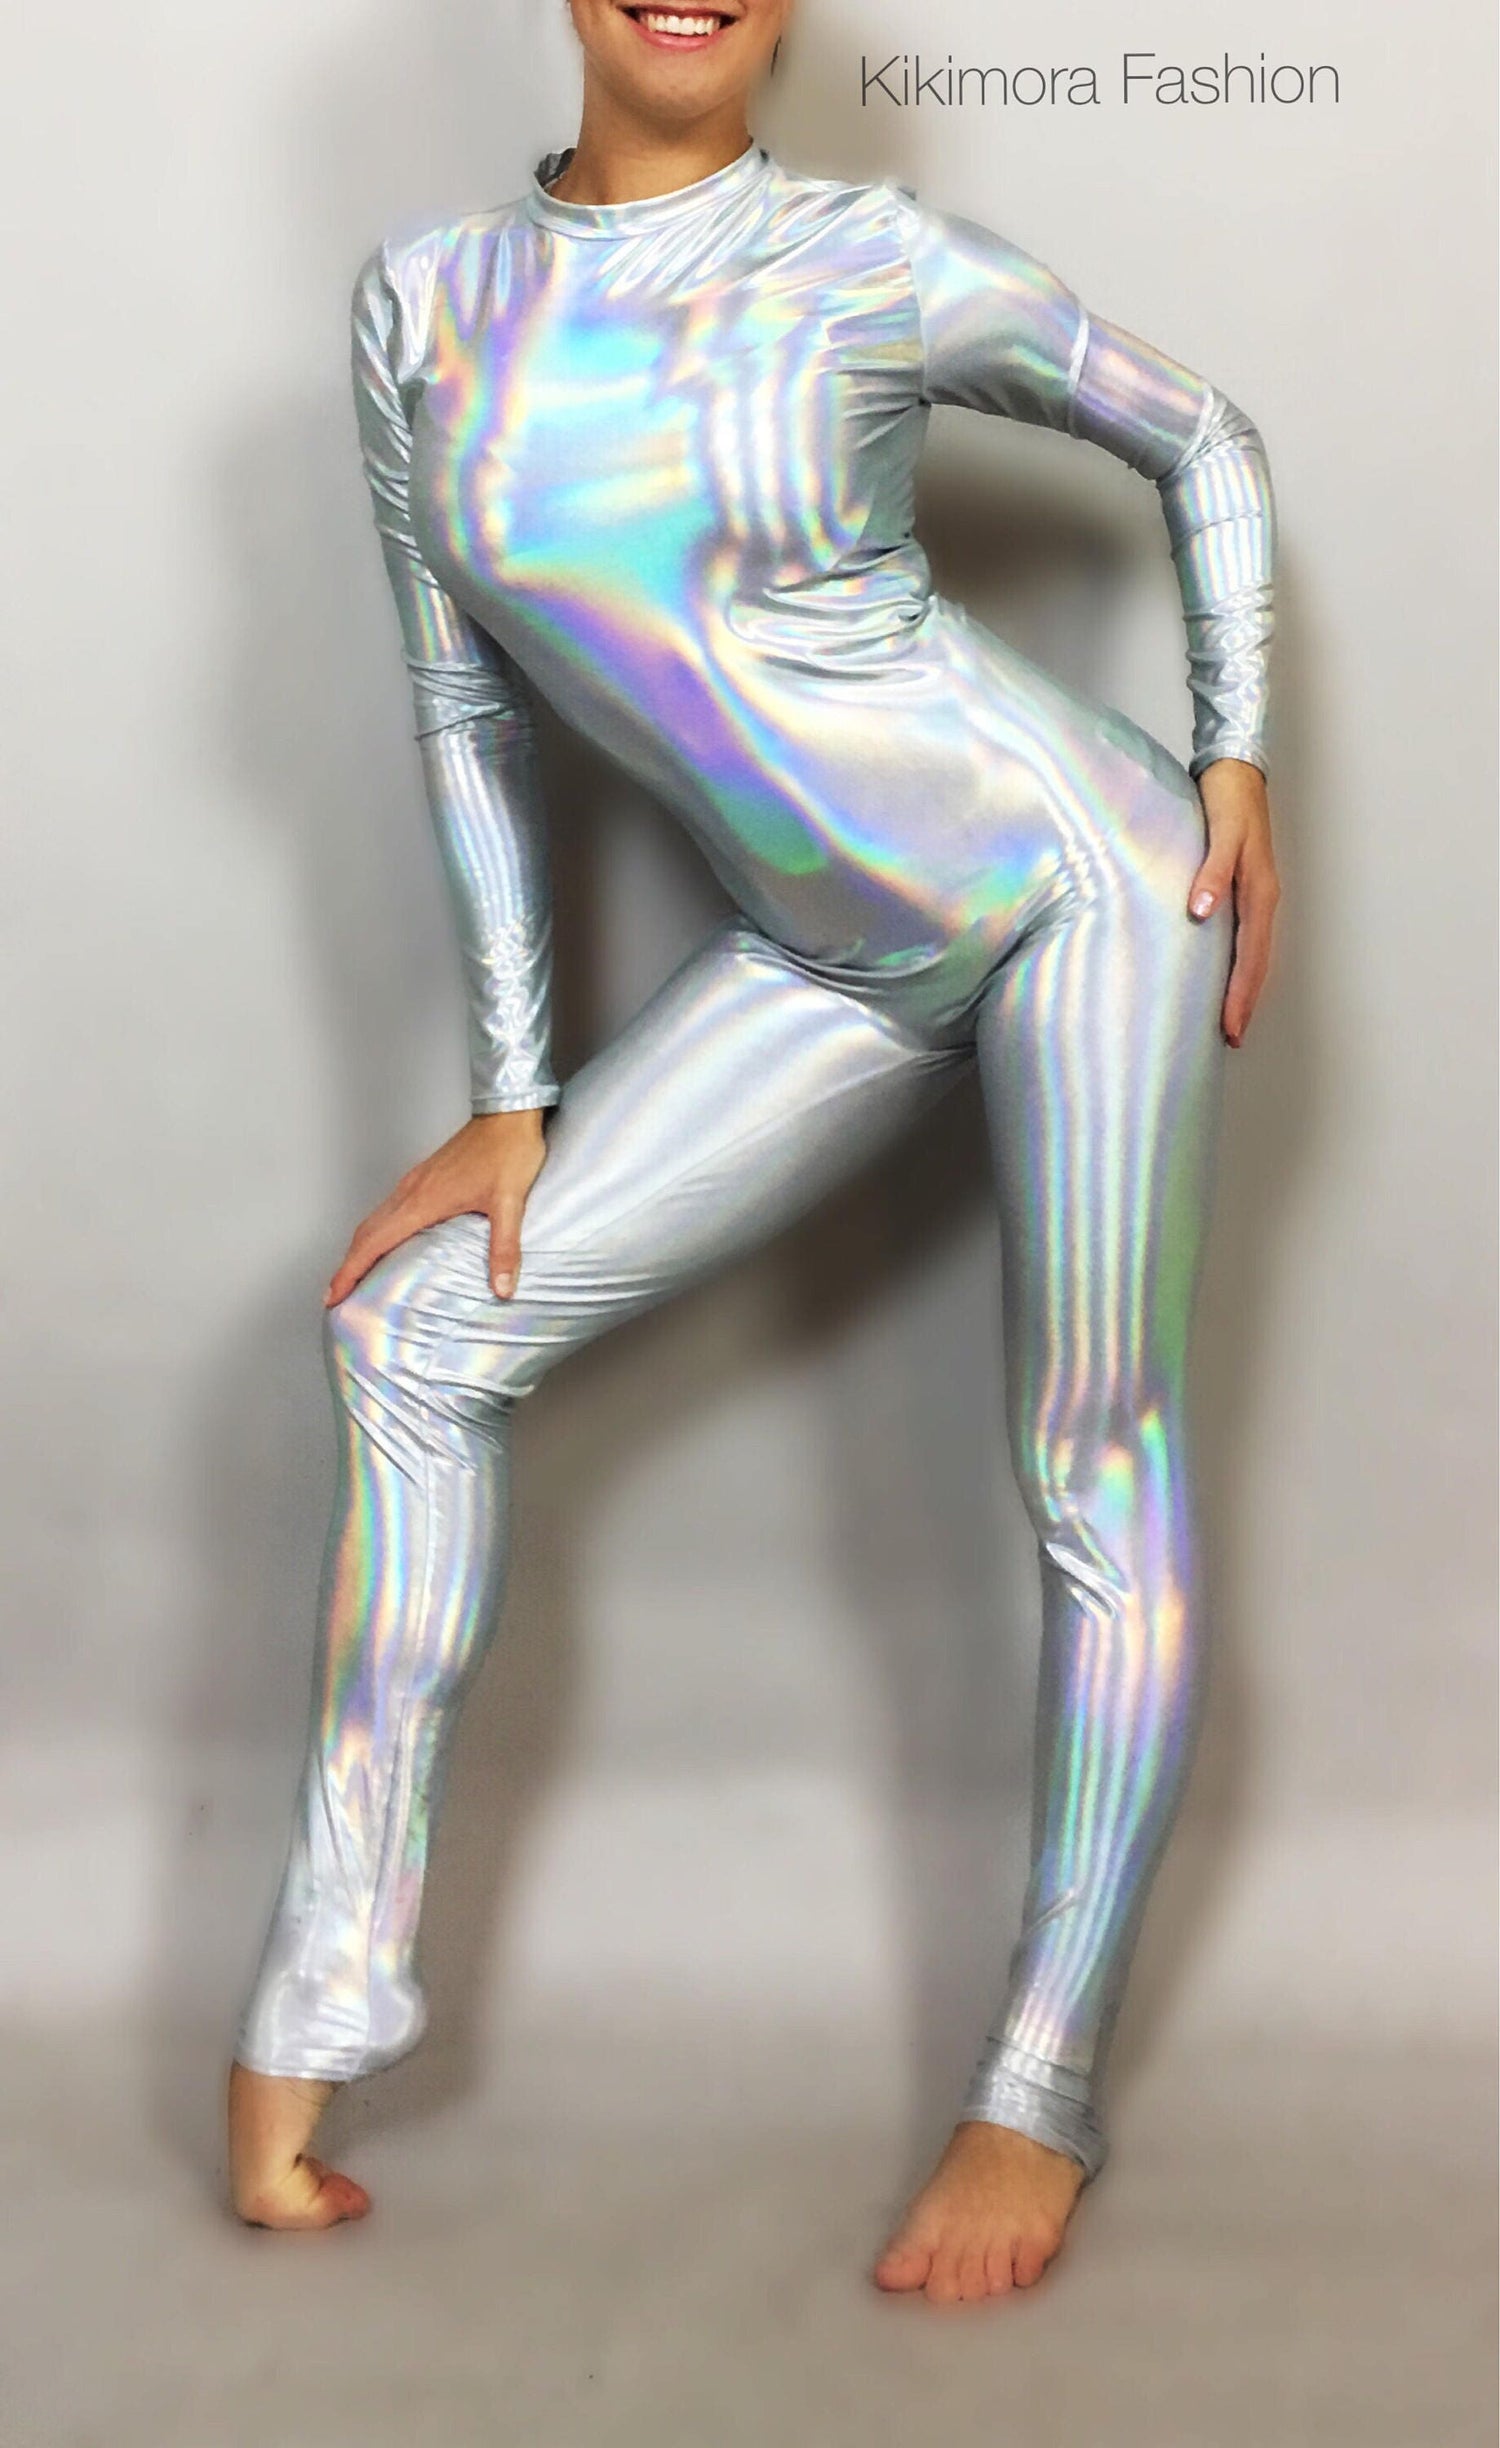 Robot Costume Futuristic clothing, Exotic Dancewear, Spandex bodysuit, Trending now.